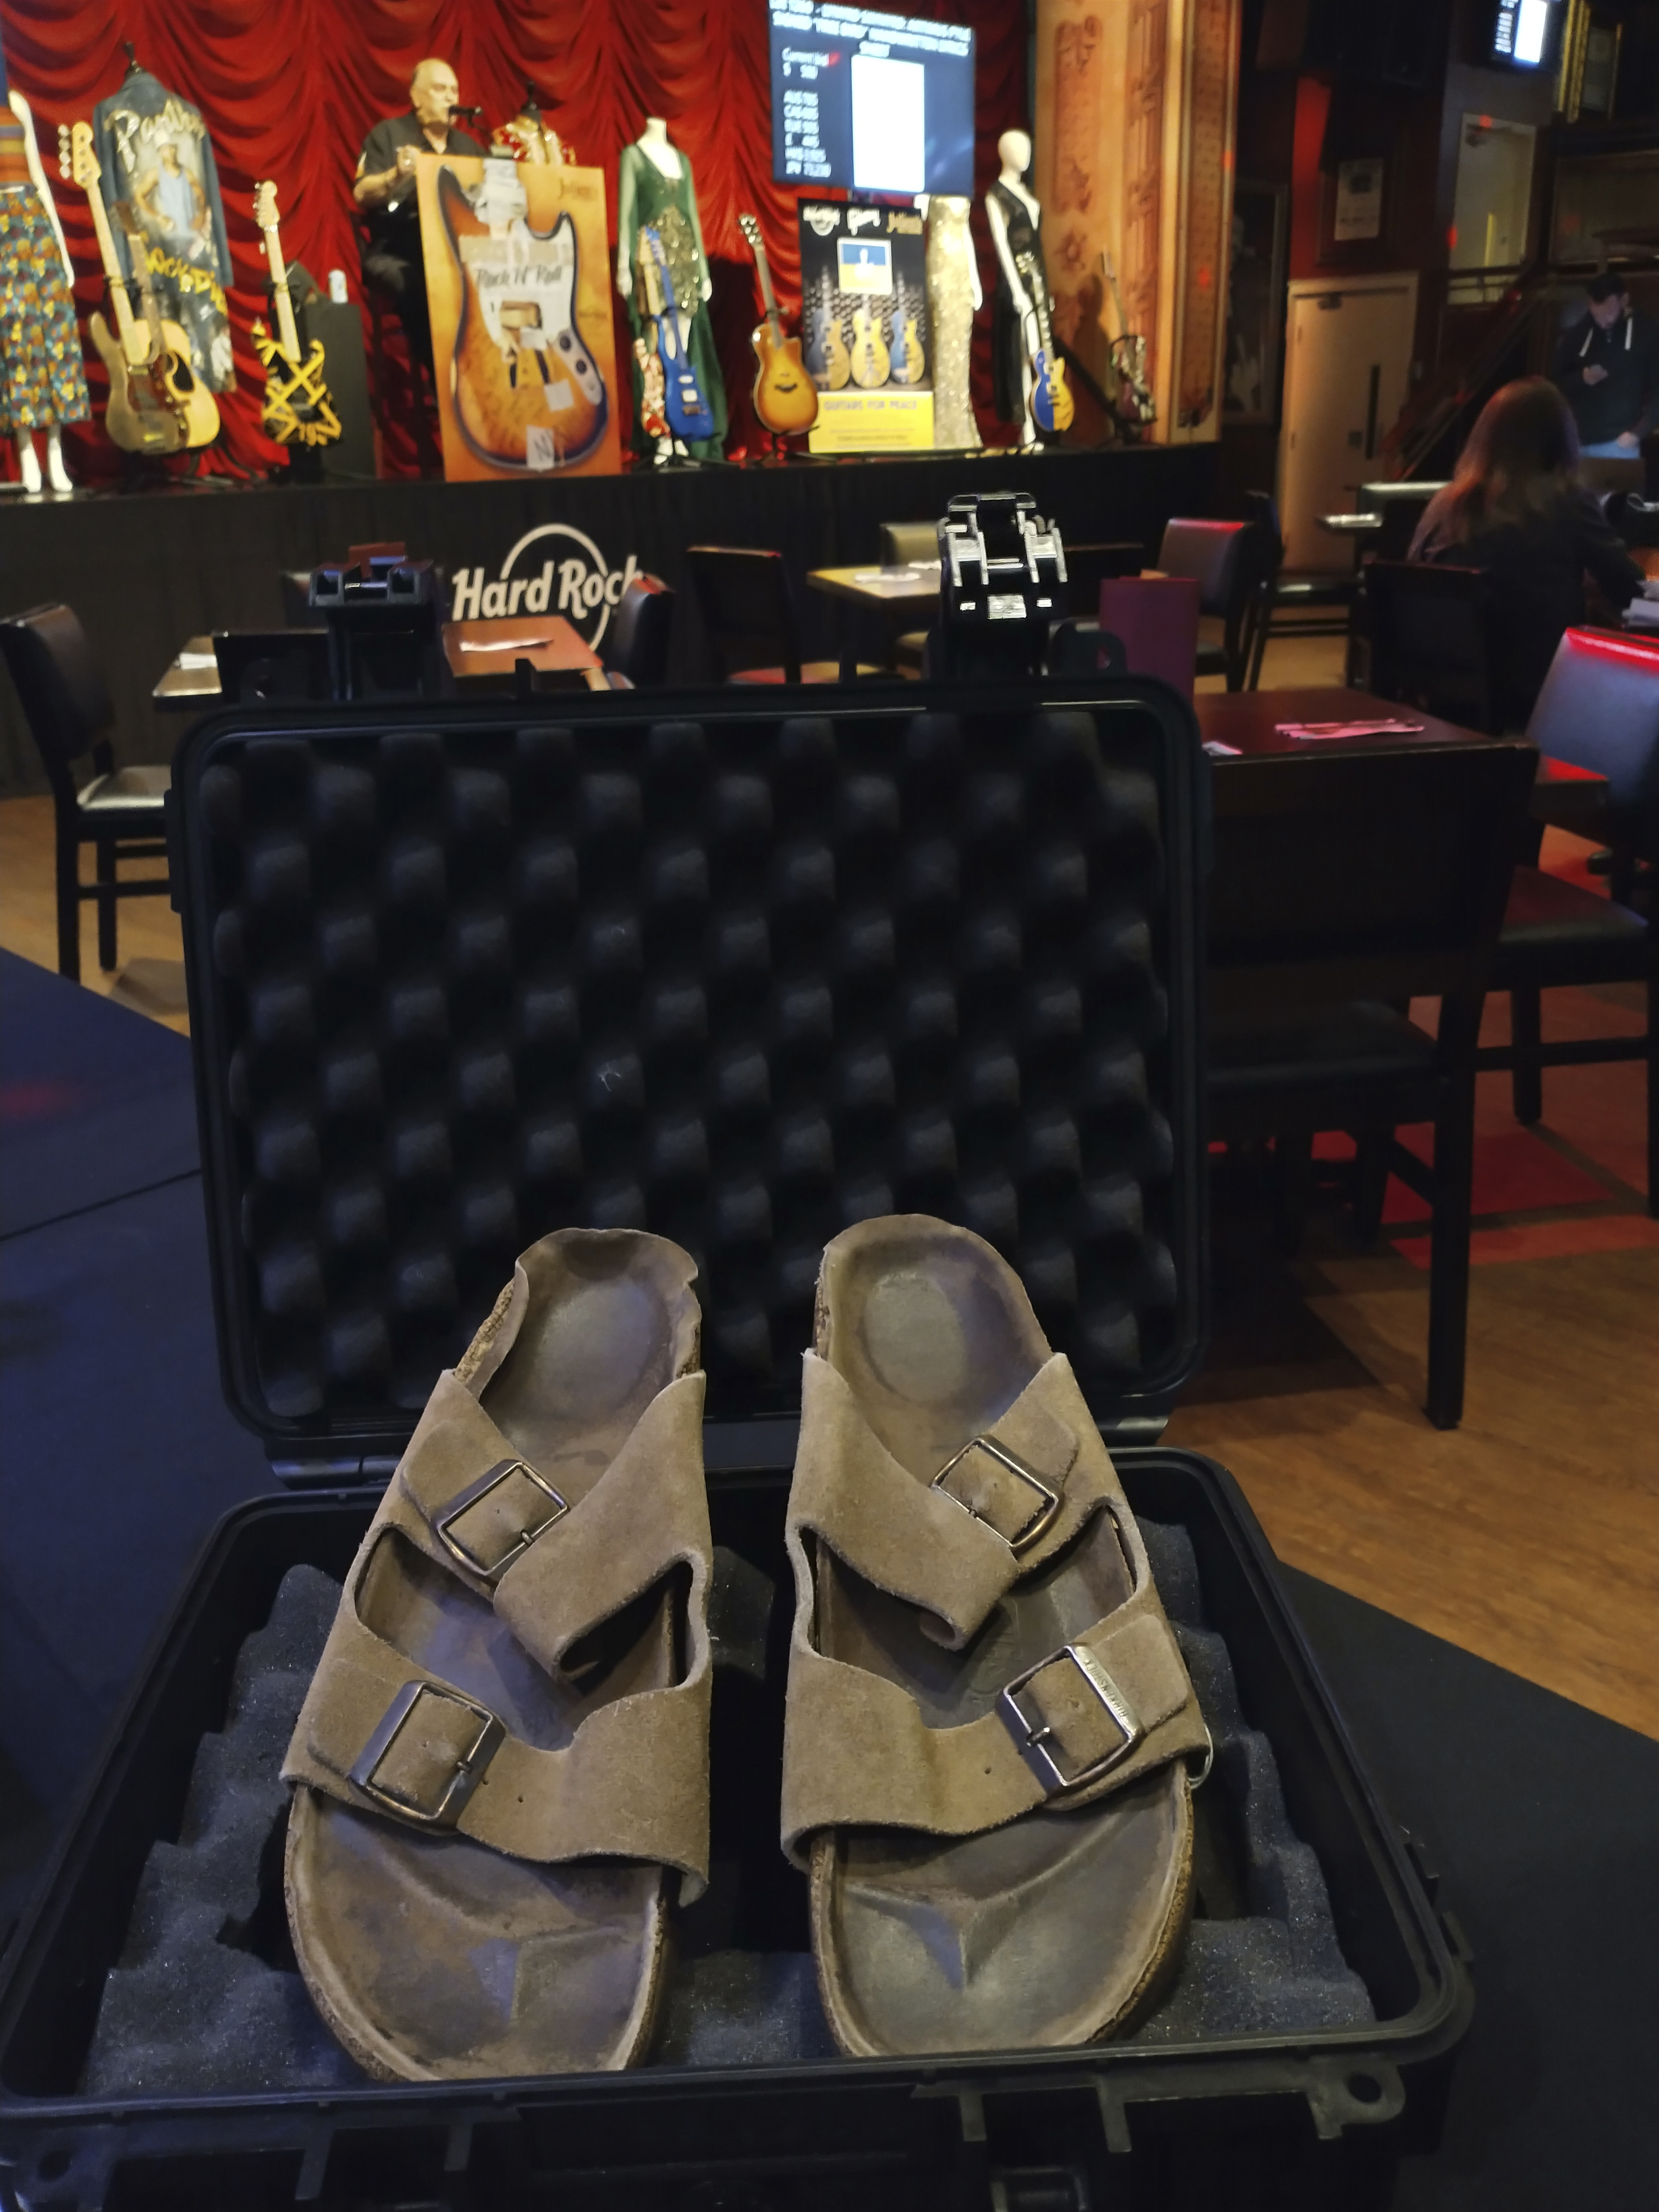 Steve Jobs' Birkenstock sandals at the Hard Rock Cafe in New York 